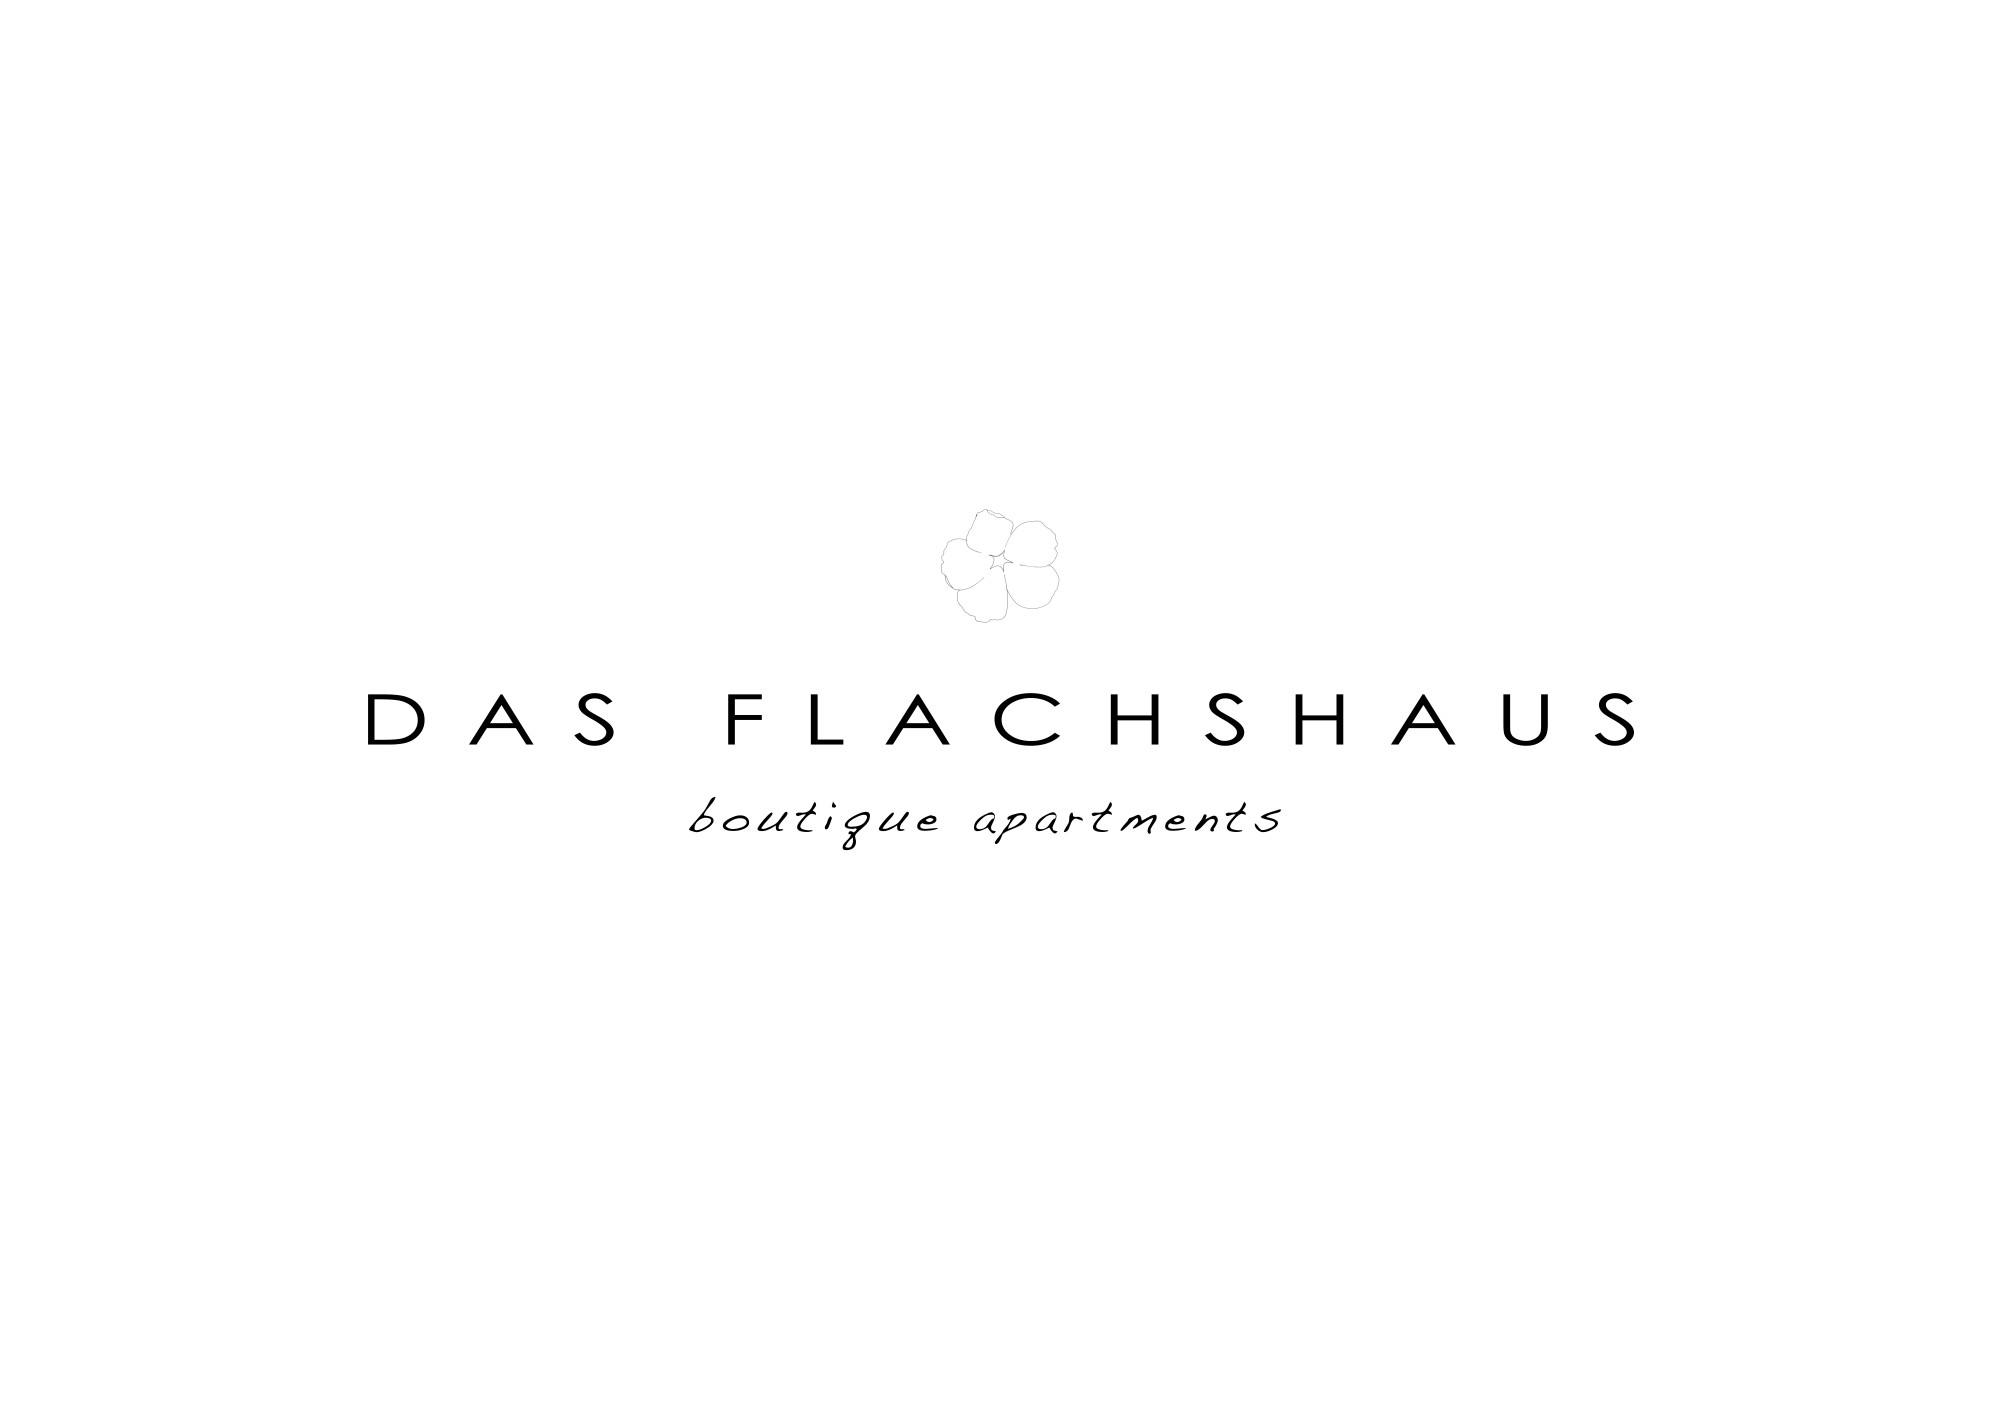 Neubau - Das Flachshaus - Boutique Apartments